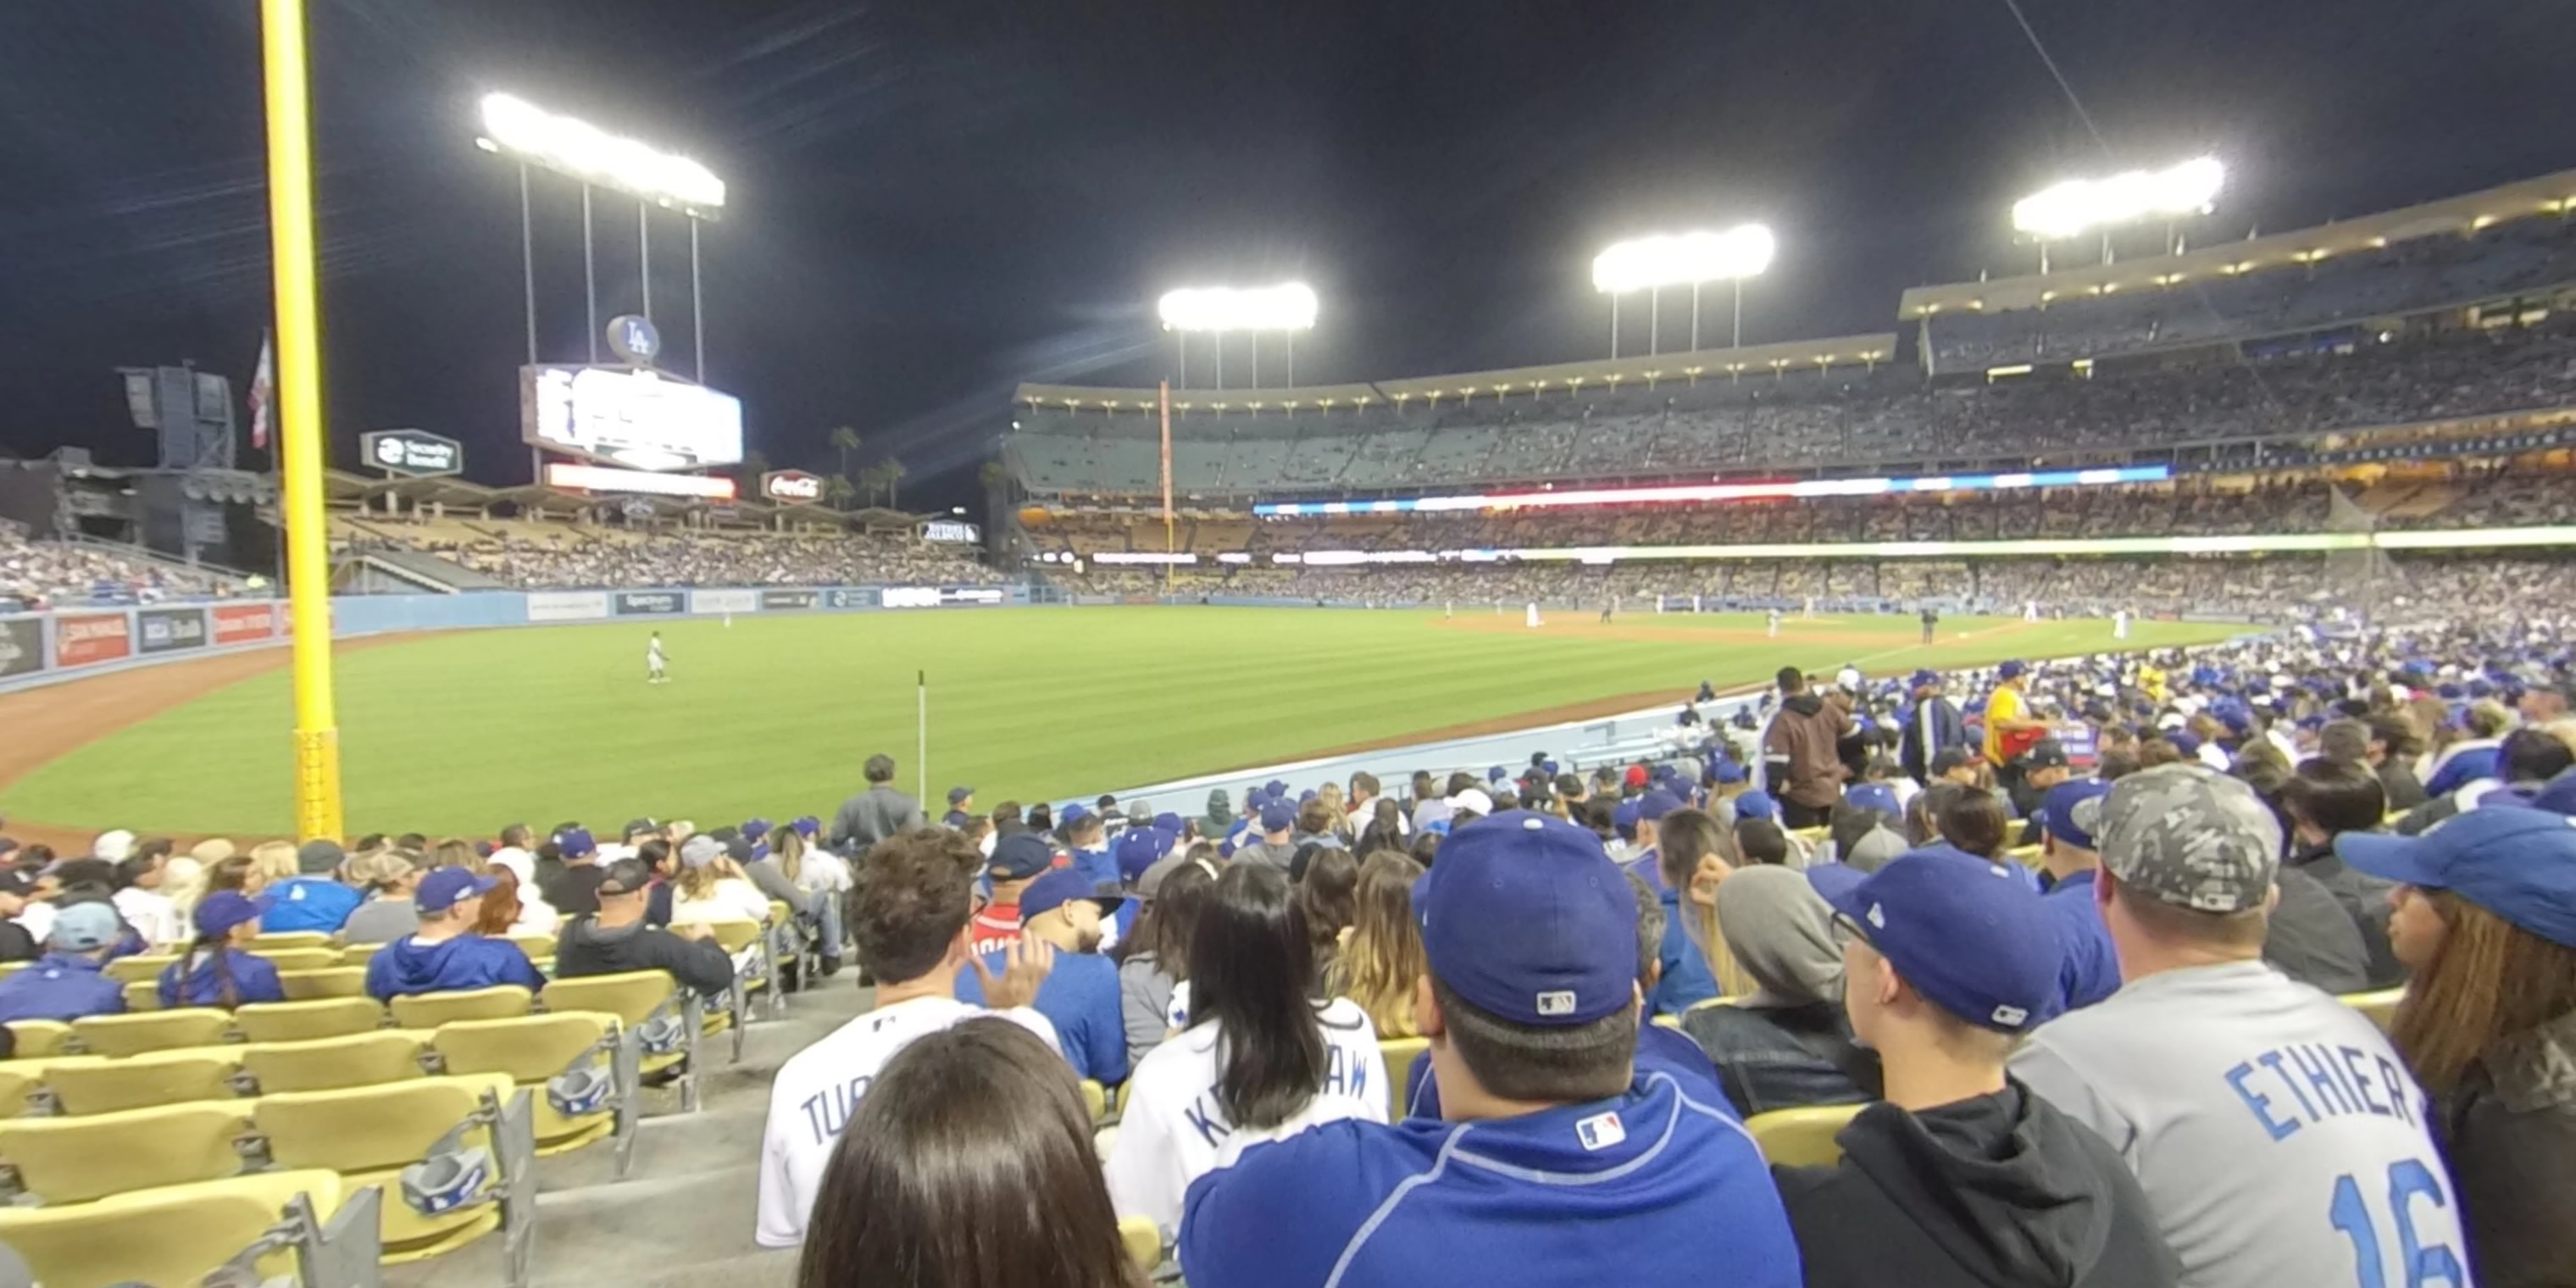 Los Angeles Dodgers Dodger Stadium Outline Tee